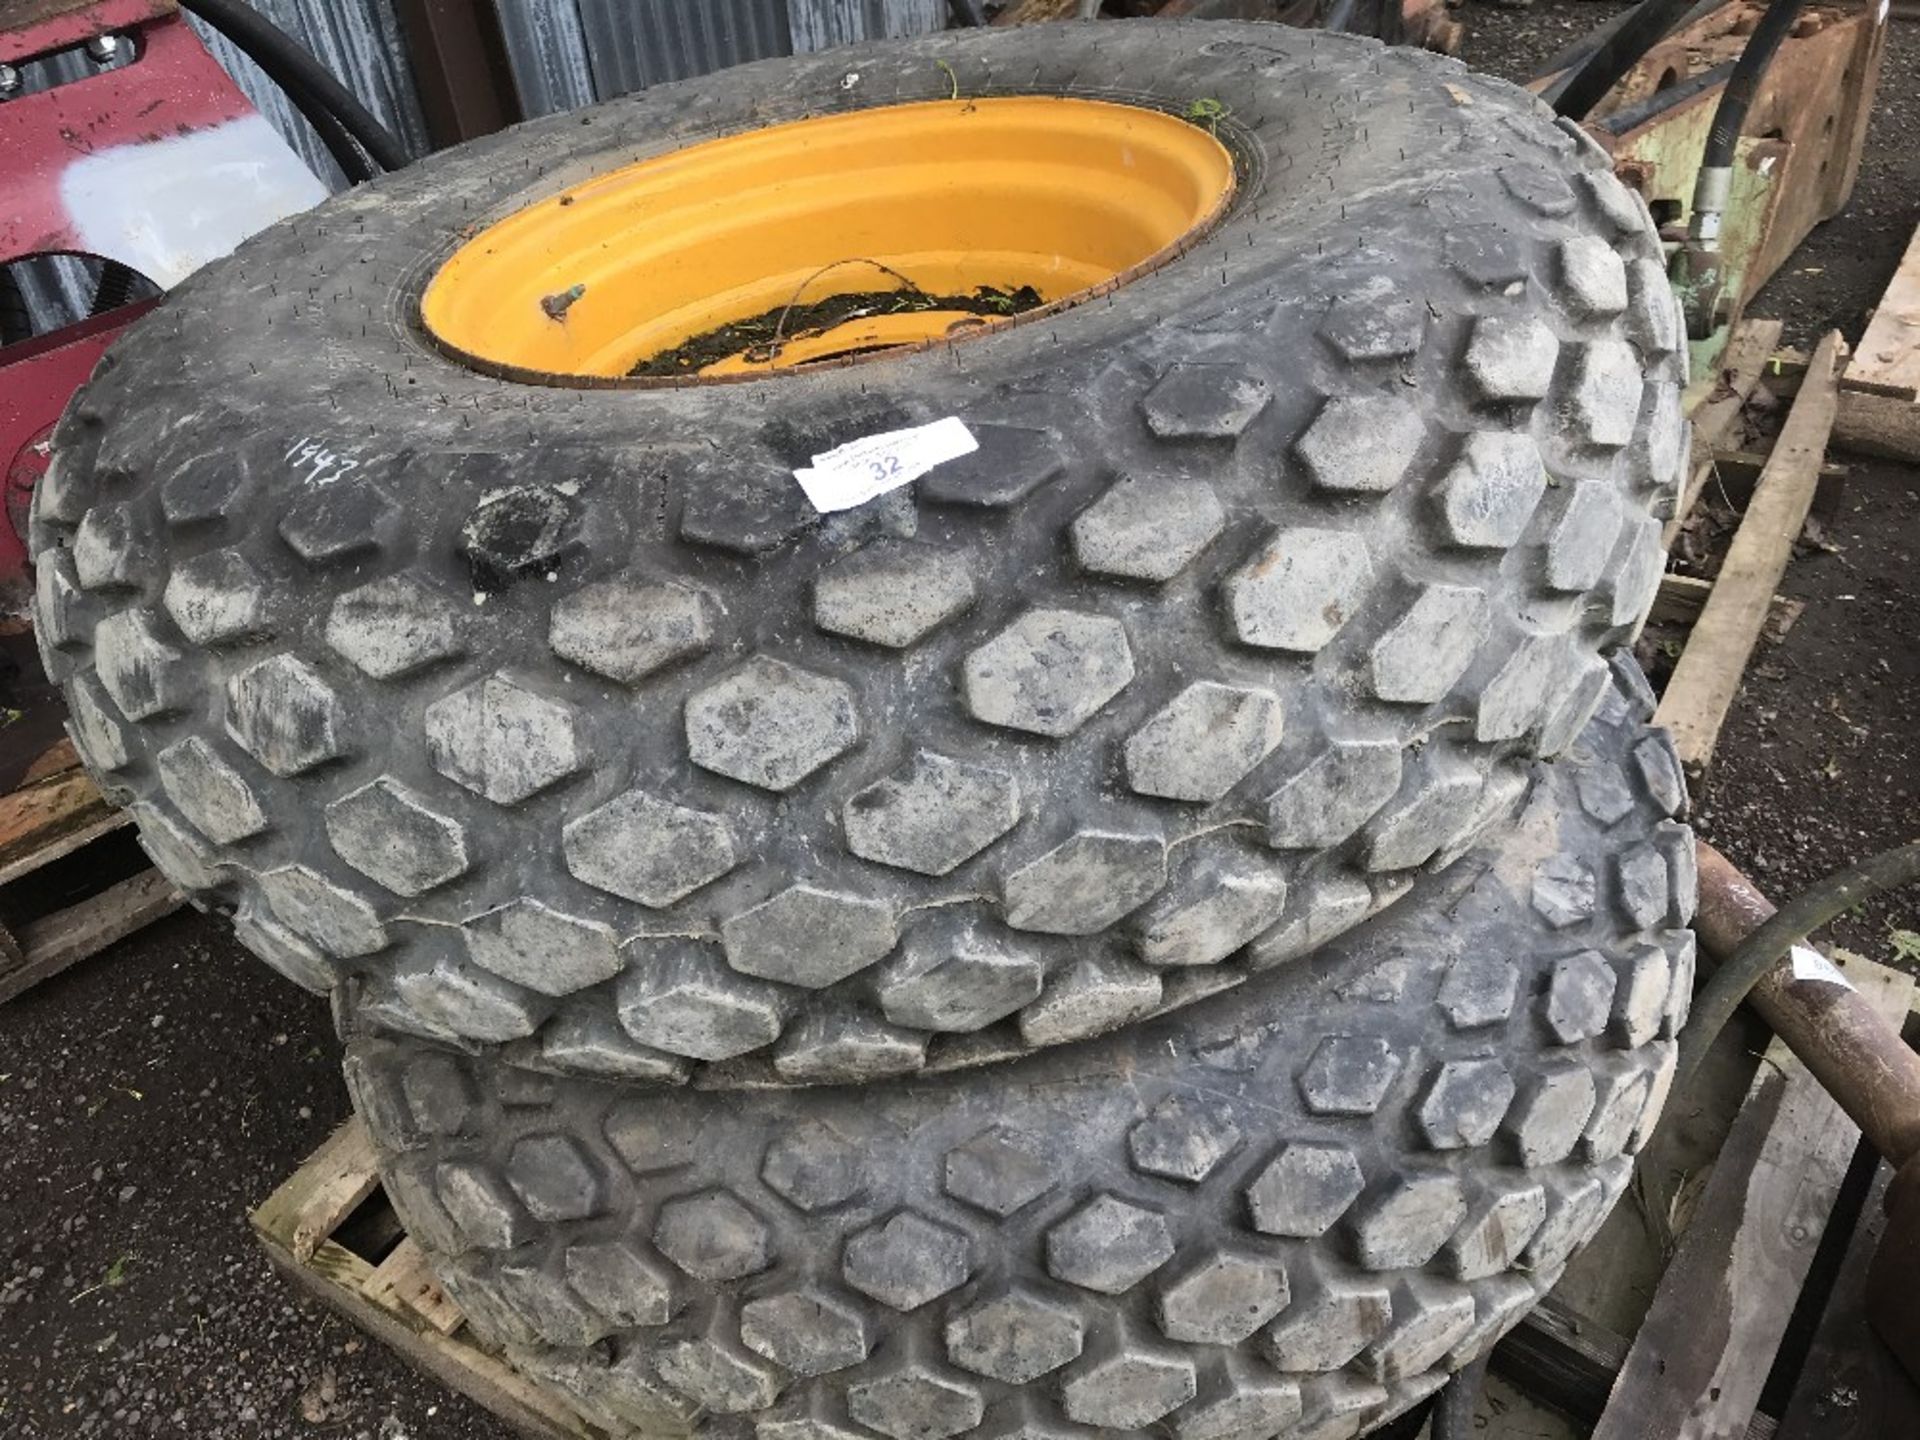 Pair of grass tyres for JCB 926 forklift